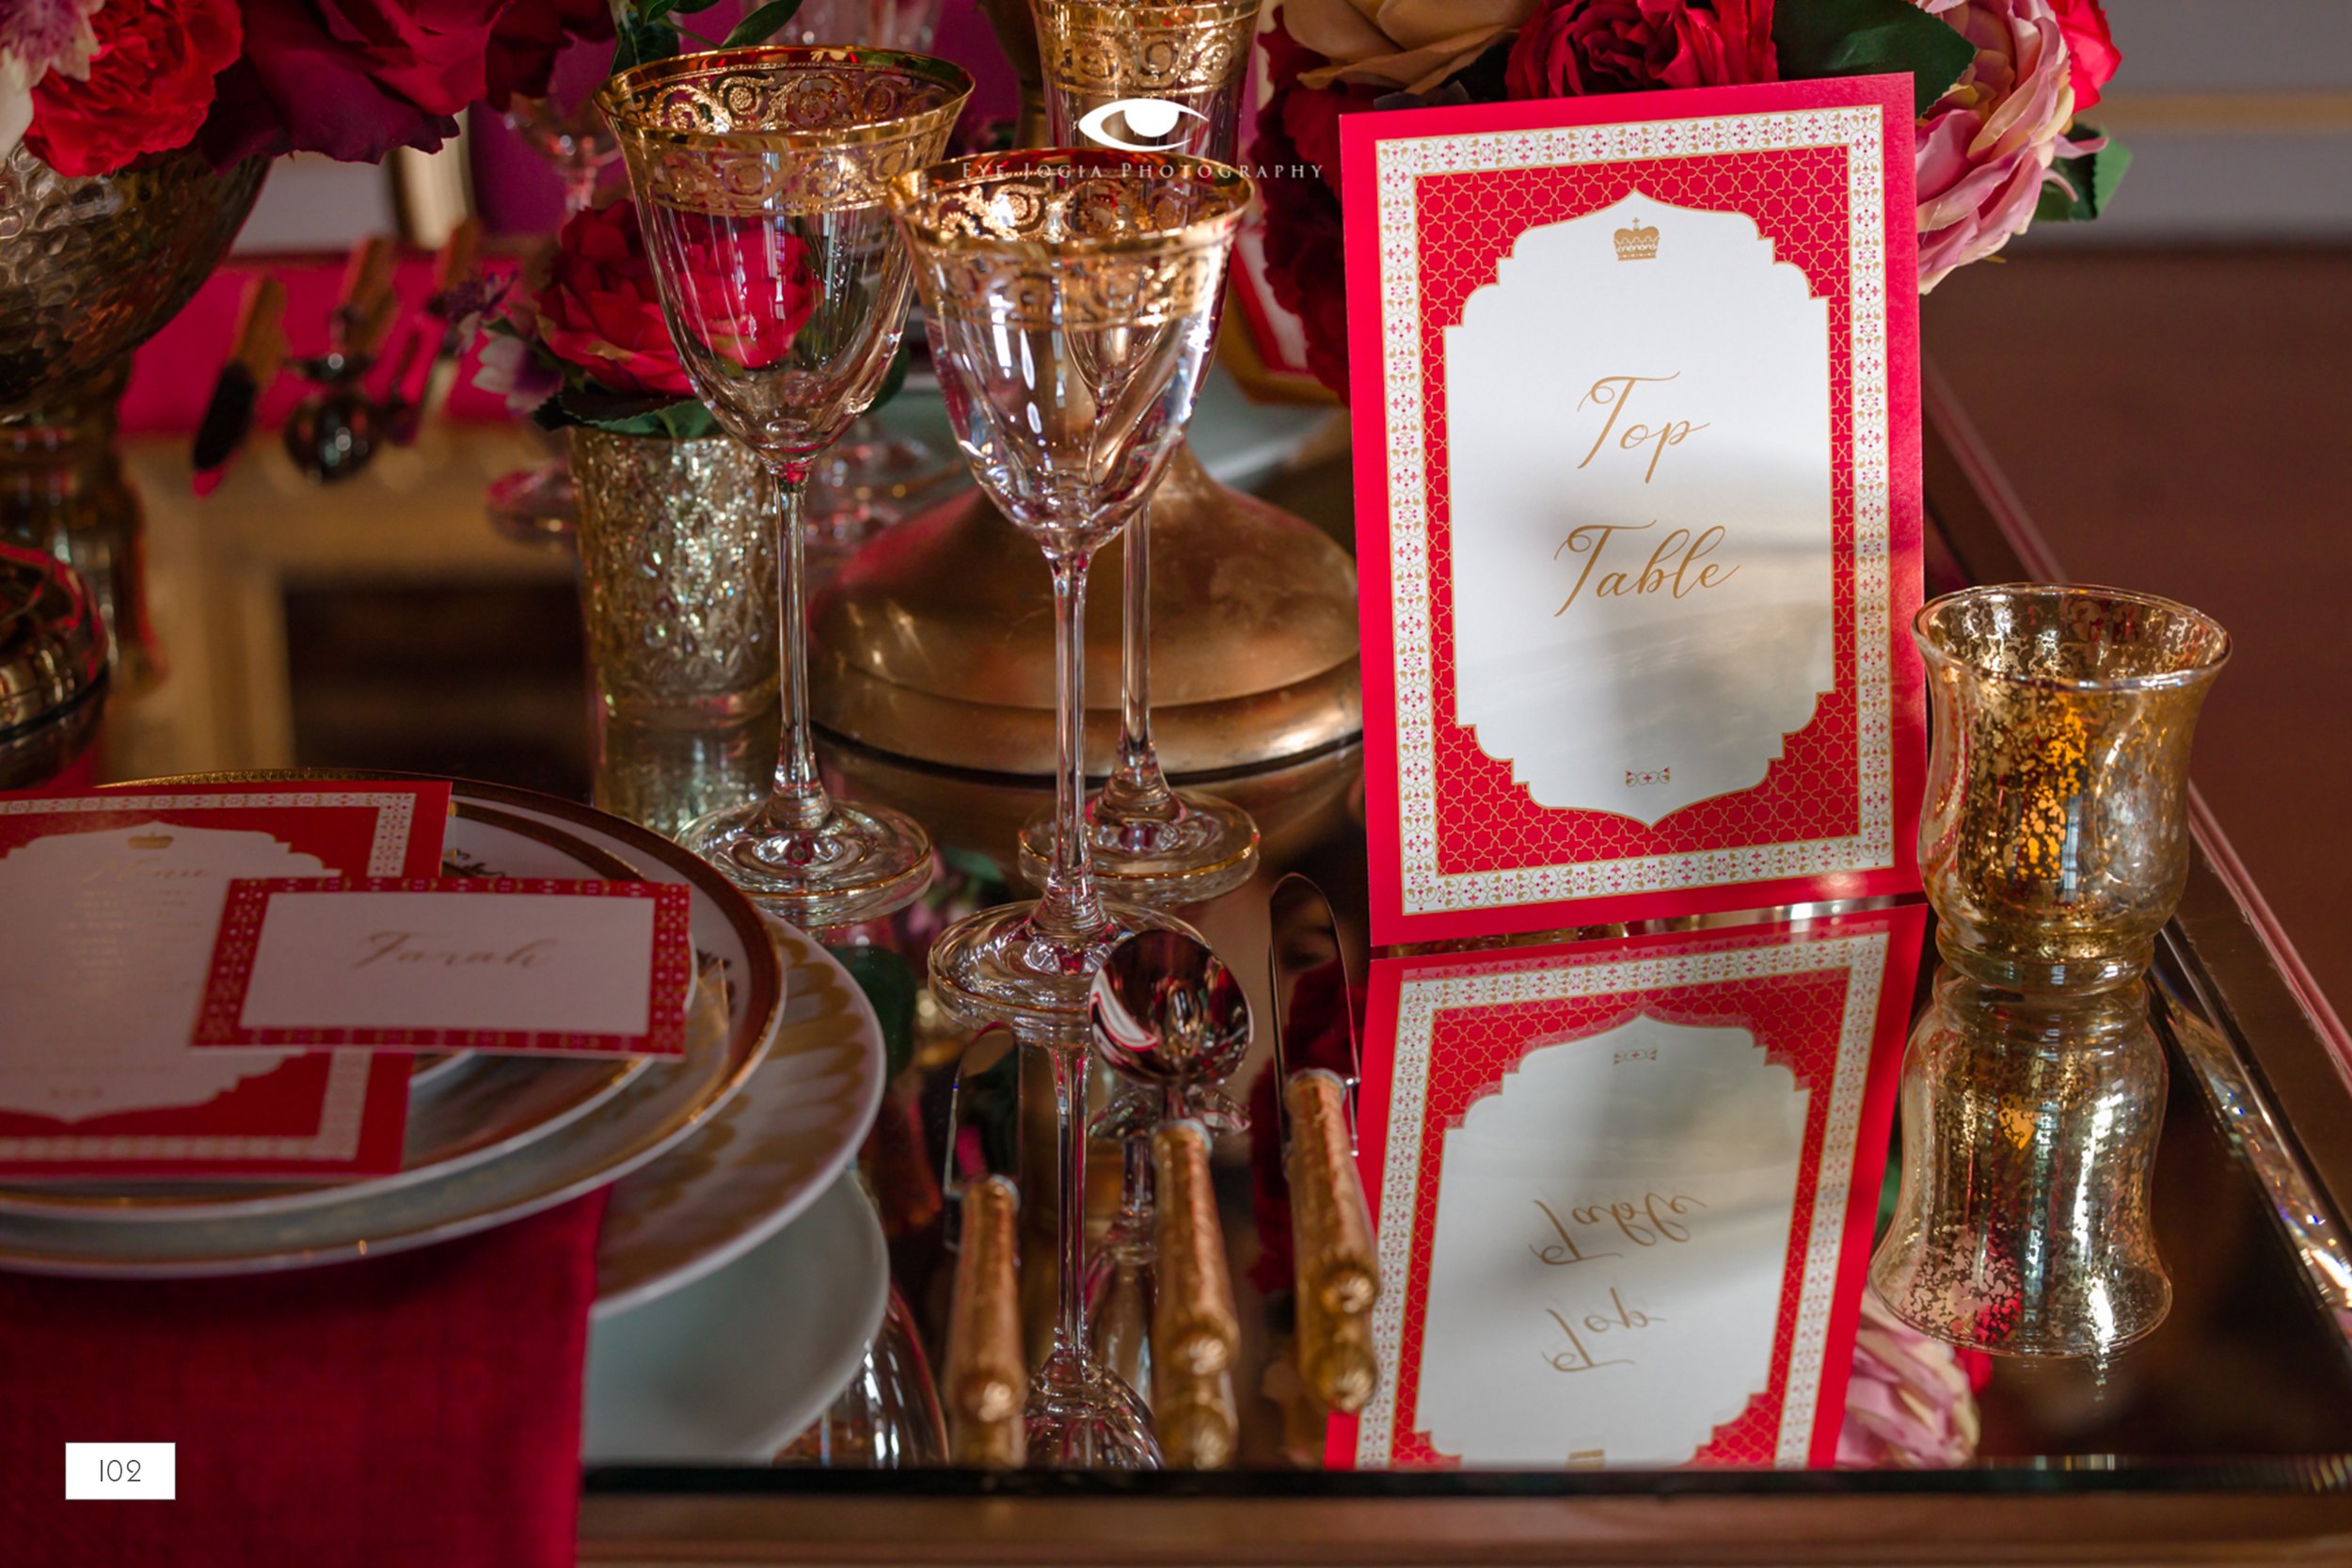 Muslim-Nikah-table-number-wedding-invitation_Kensington-Palace-I02_ananyacards.com.jpg